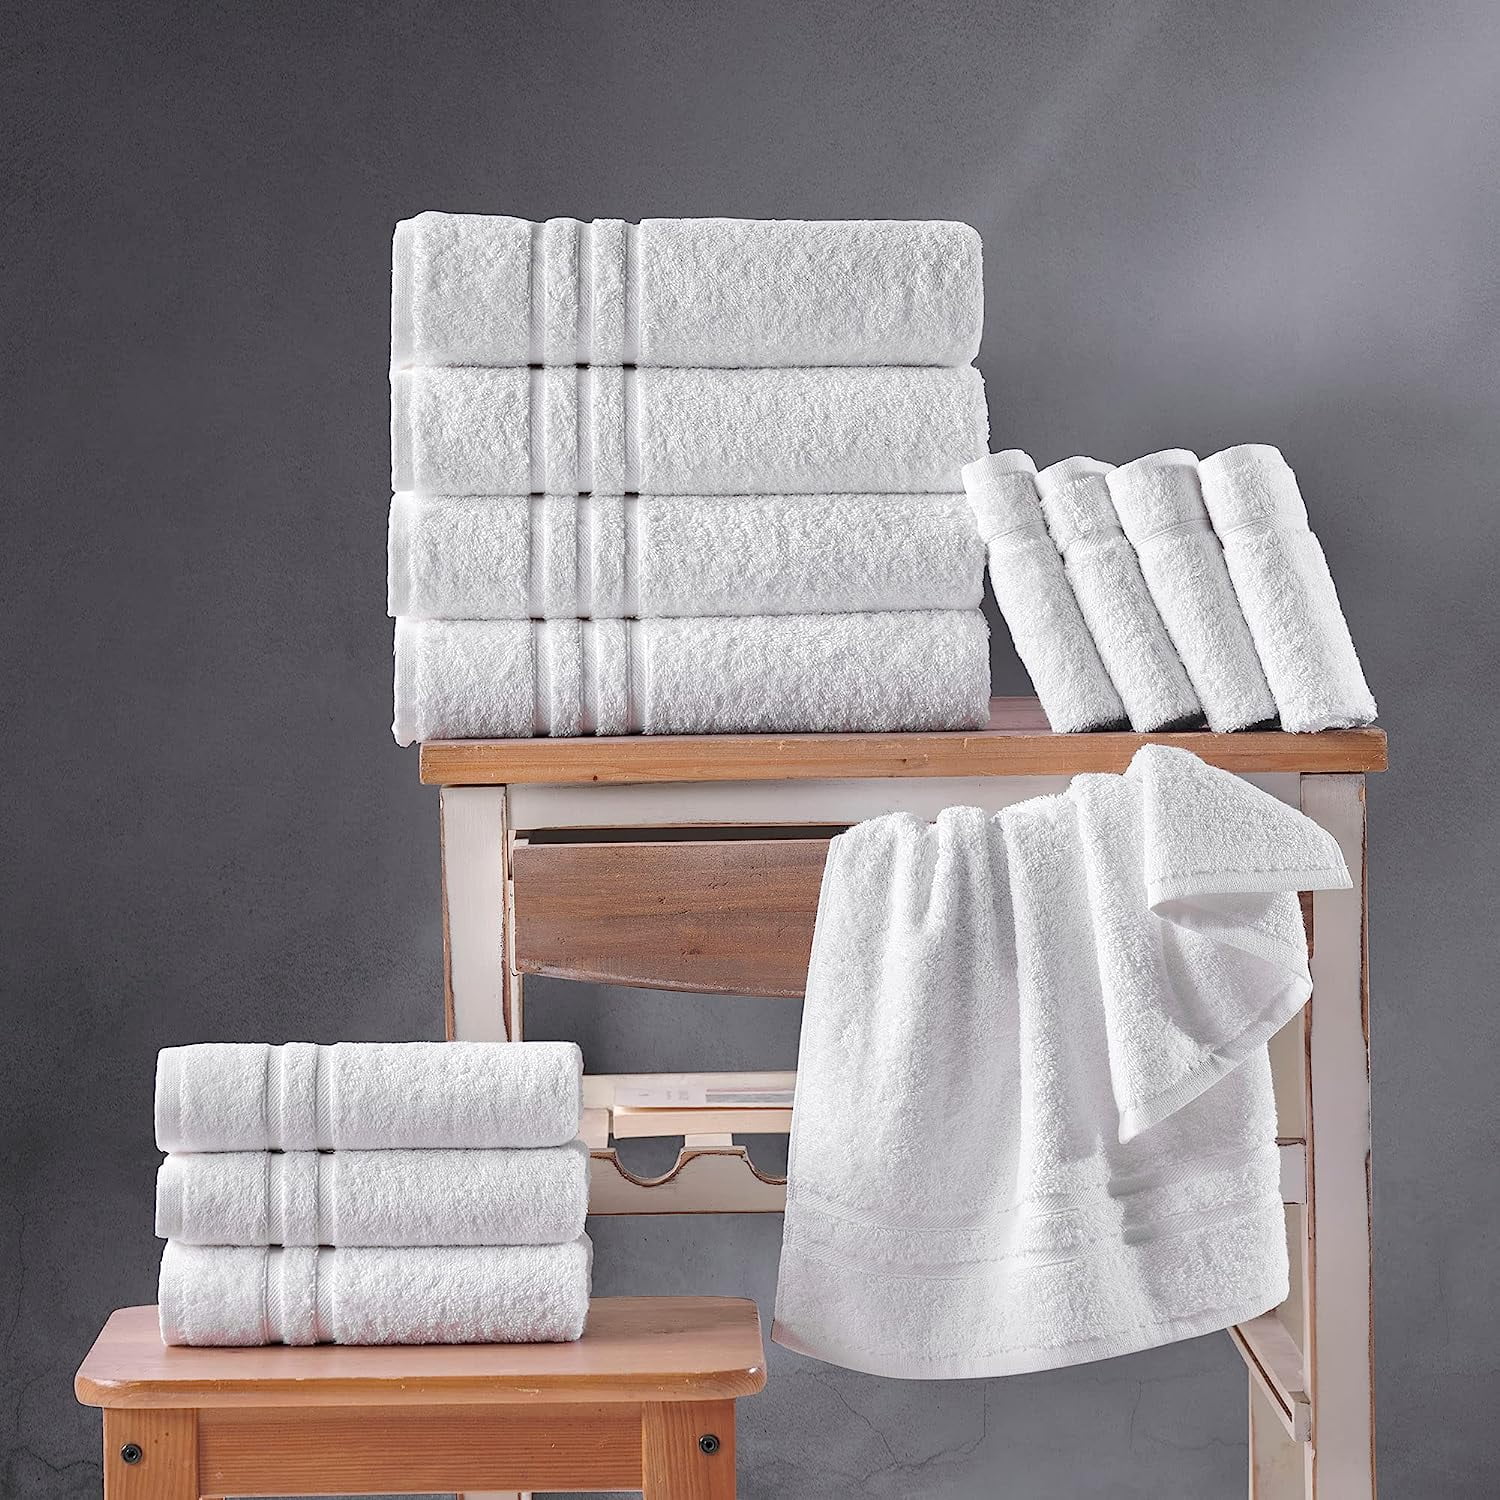 City Bath Towel, Cinnamon – Be Home